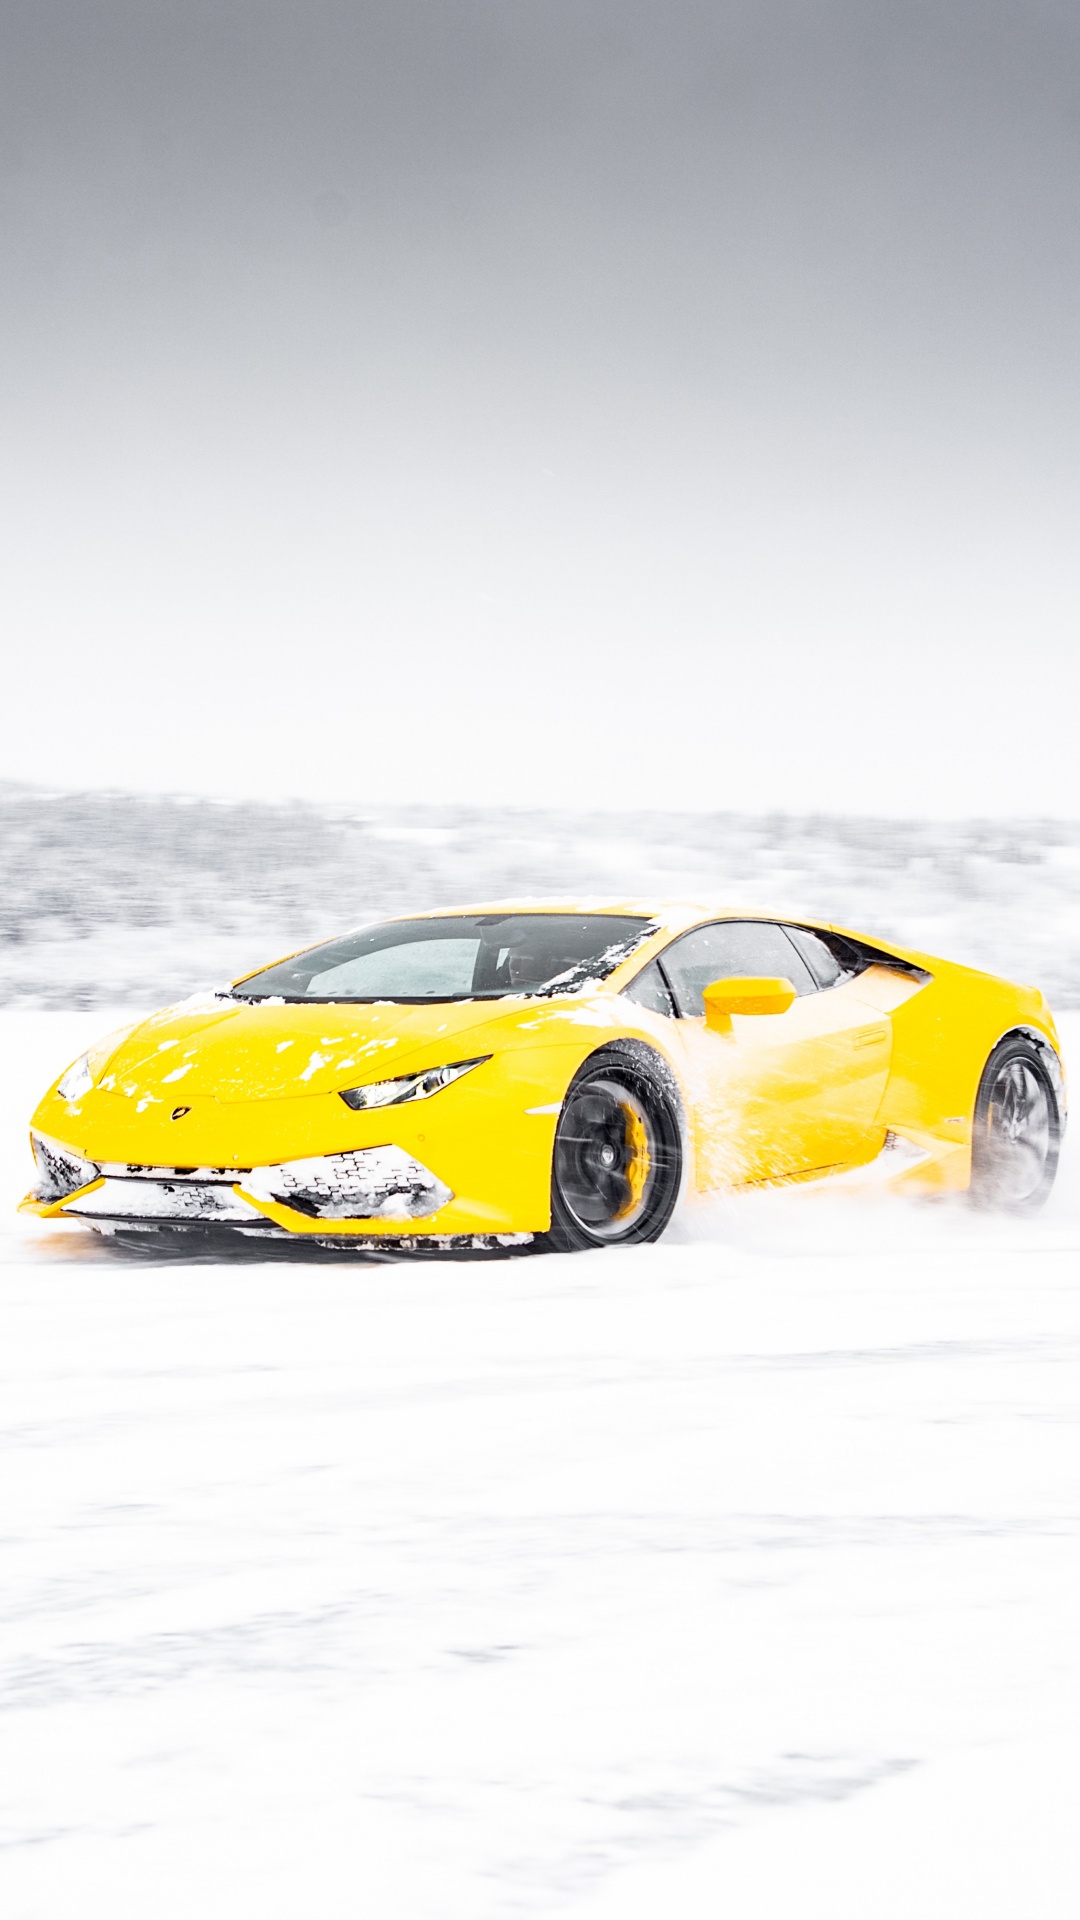 Yellow Ferrari 458 Italia on Snow Covered Ground. Wallpaper in 1080x1920 Resolution